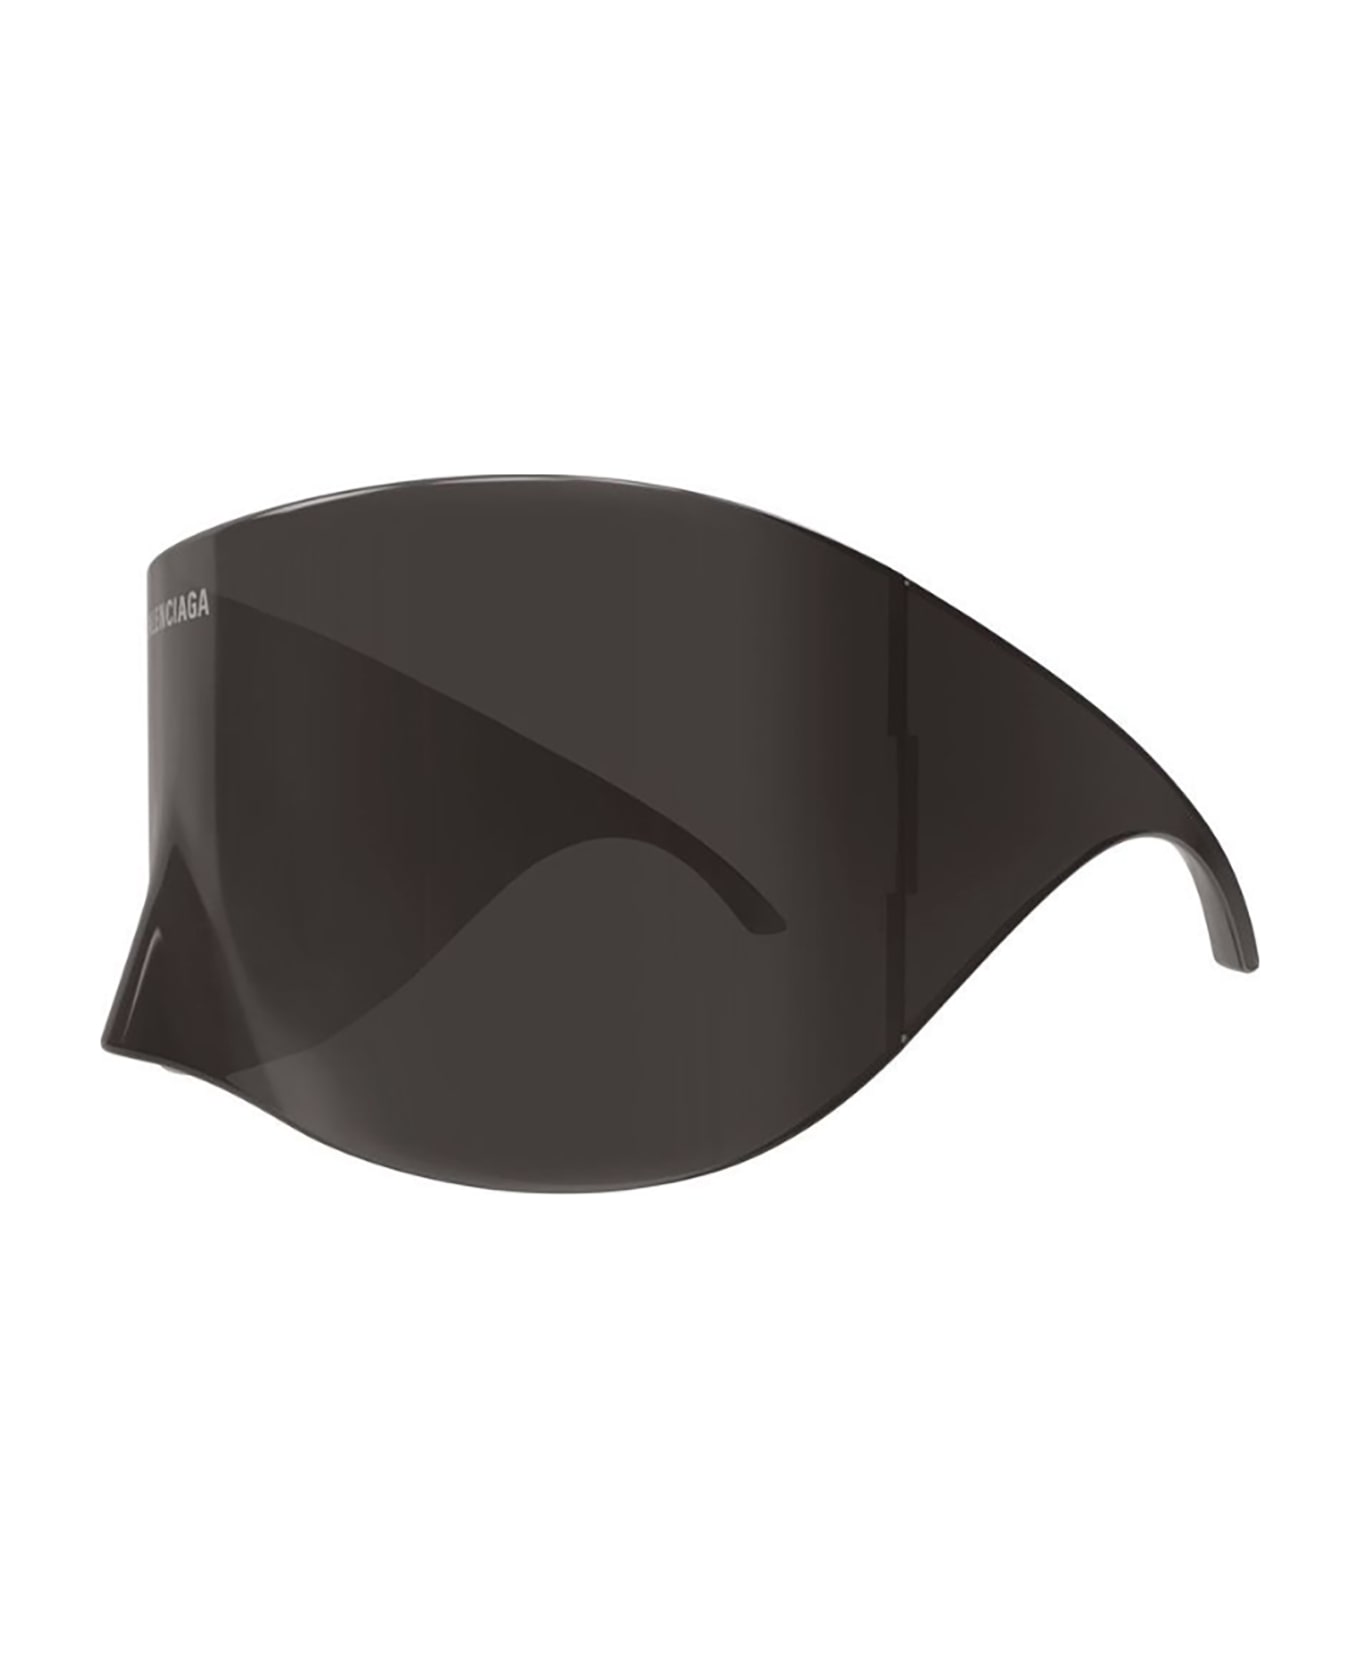 Balenciaga Eyewear BB0288S Sunglasses - HAWKERS Black Chrome CLASSY Sunglasses for Men and Women UV400